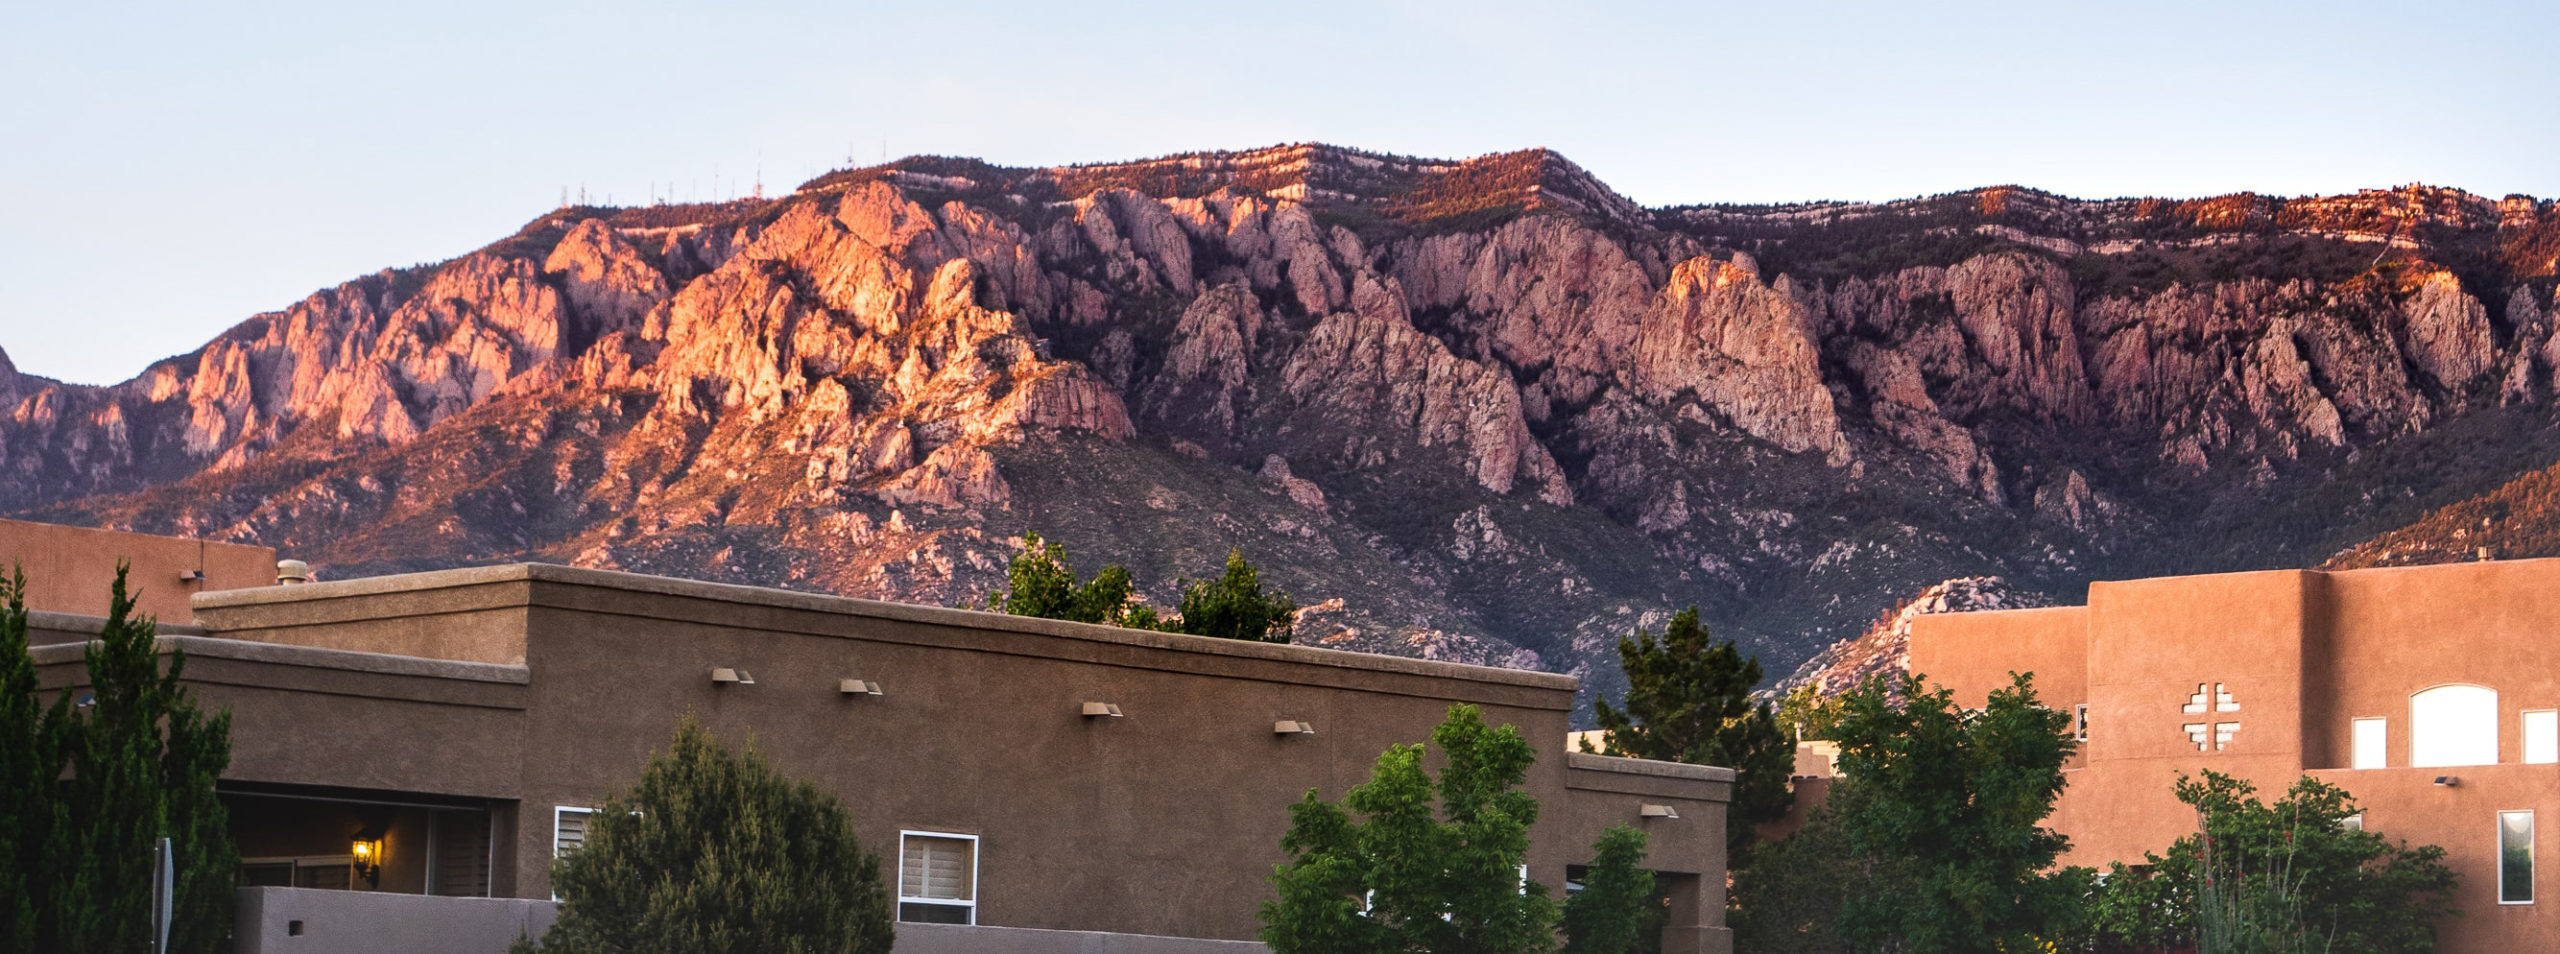 Albuquerque, New Mexico neighborhood at sunset